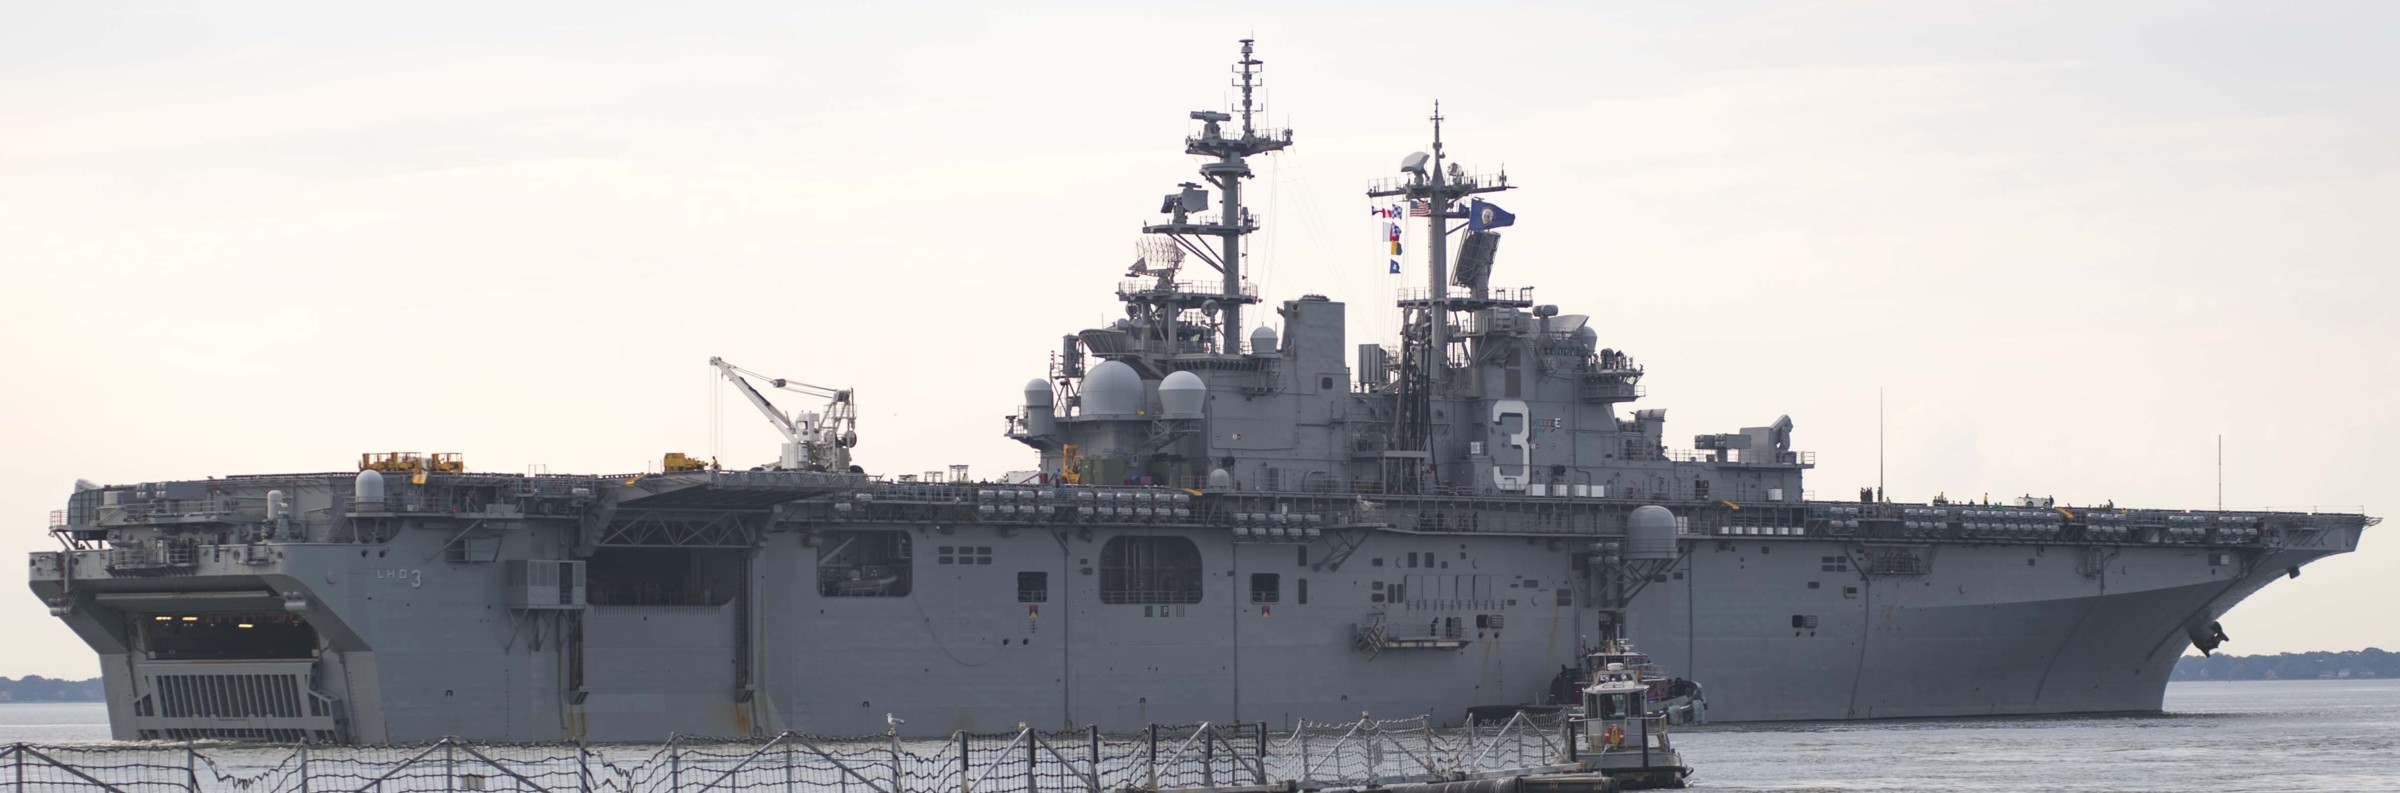 lhd-3 uss kearsarge wasp class amphibious assault ship landing dock us navy naval station norfolk virginia 175